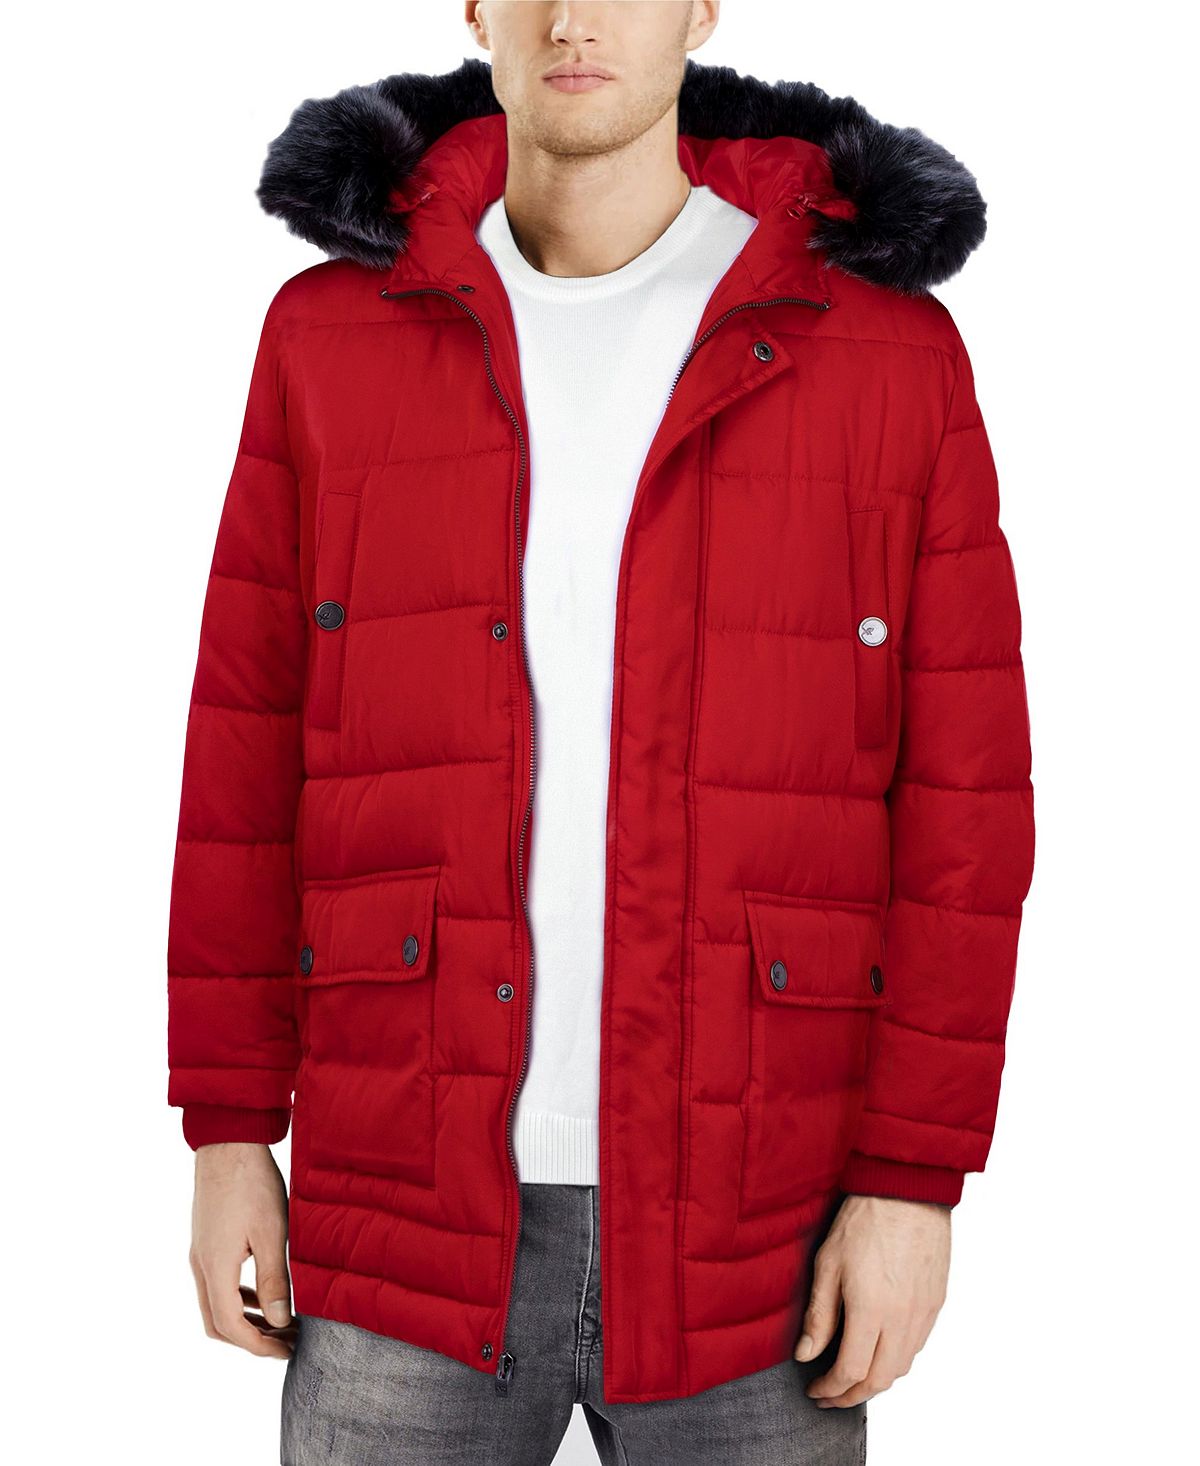 Мужская лыжная куртка с капюшоном X-Ray, красный мазь лыжная луч ray синтетич w 8 10 18